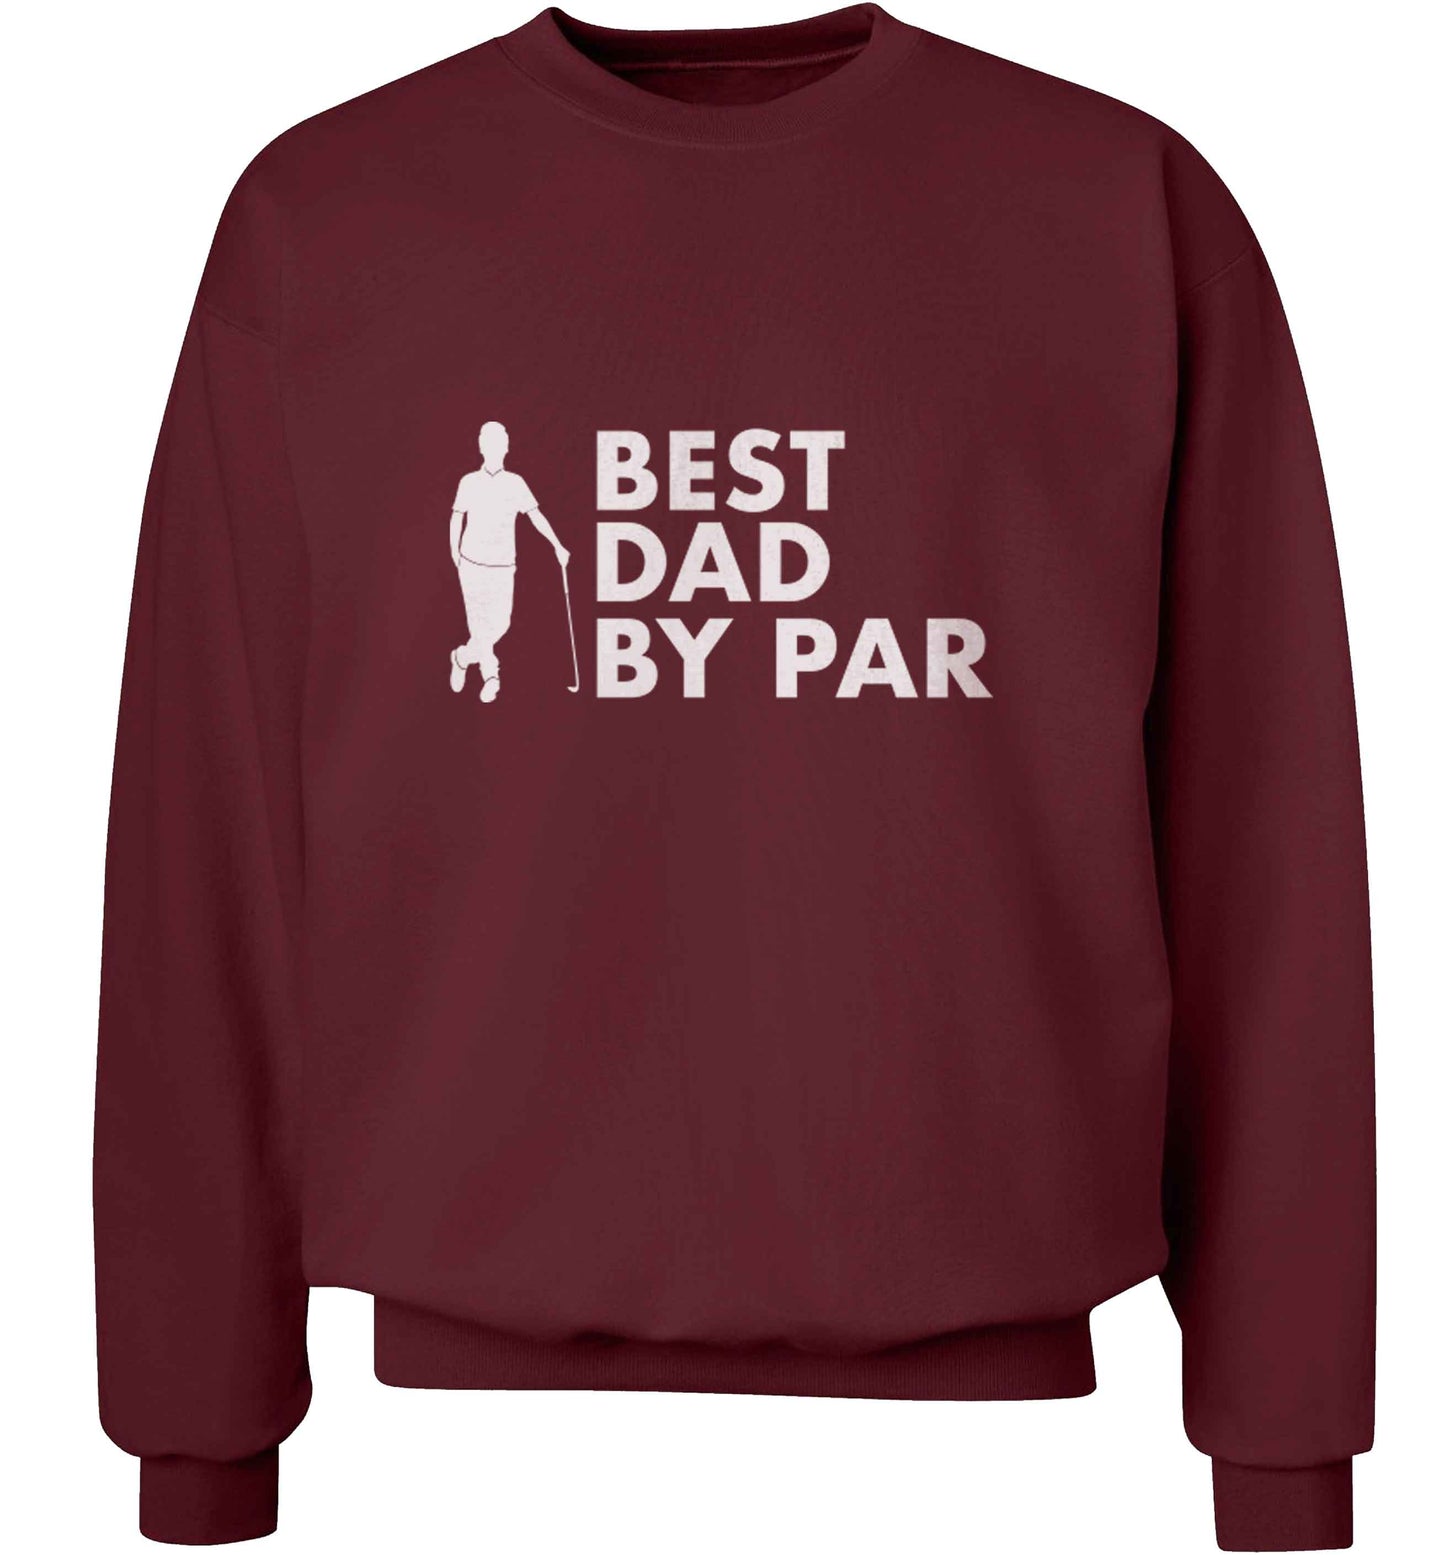 Best dad by par adult's unisex maroon sweater 2XL